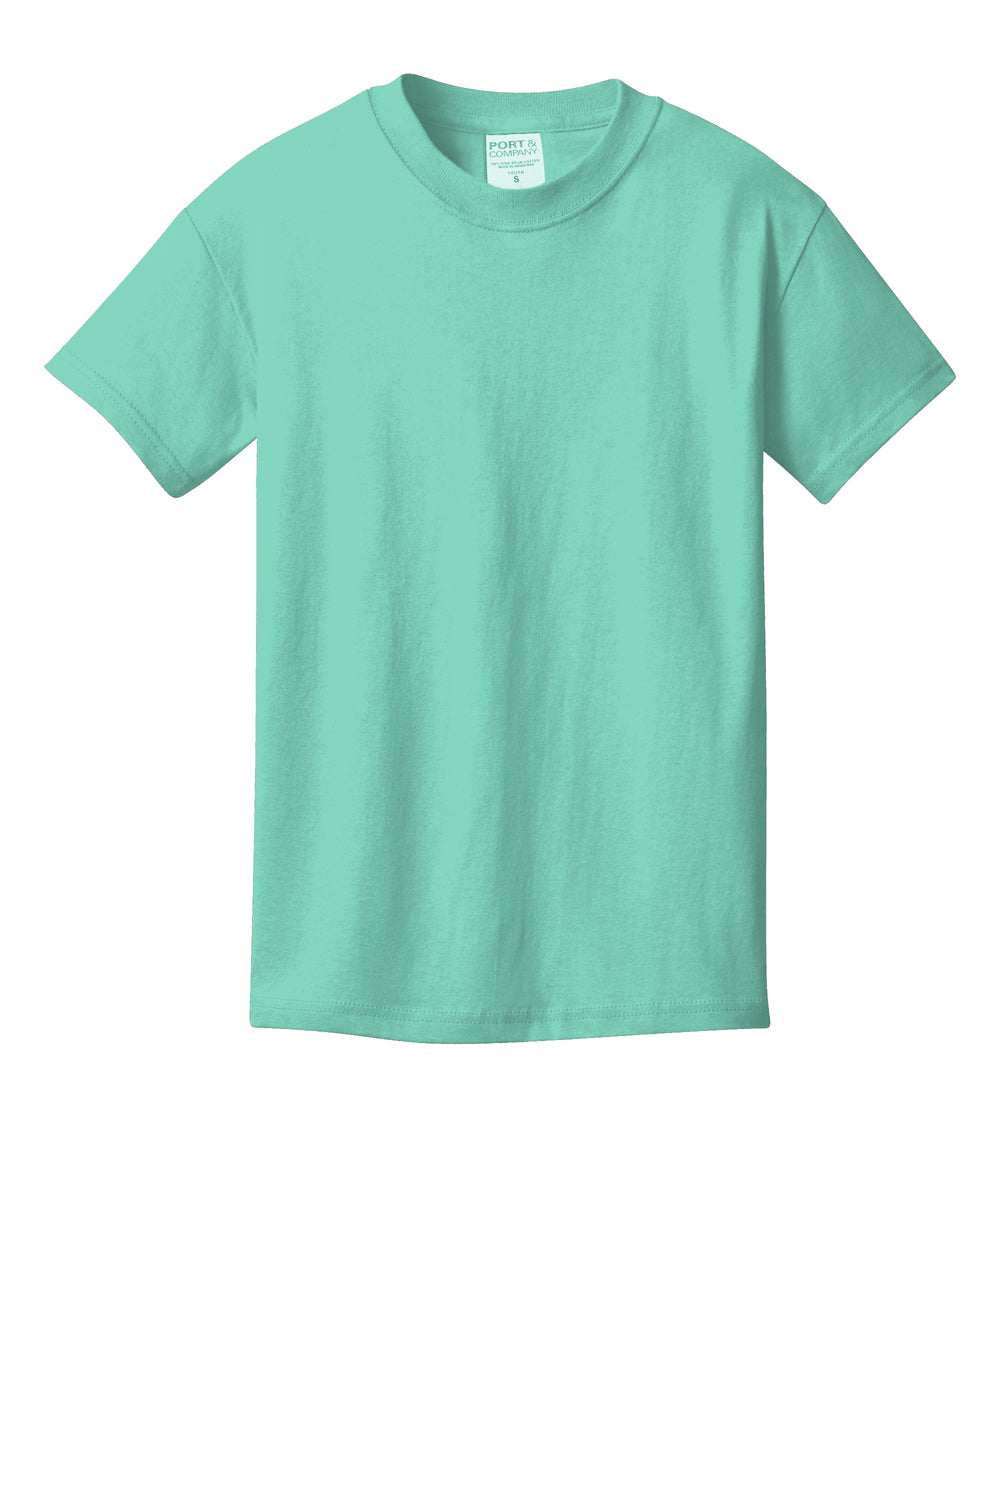 Port & Company Youth Beach Wash Short Sleeve Crewneck T-Shirt Cool Mint Green Flat Front